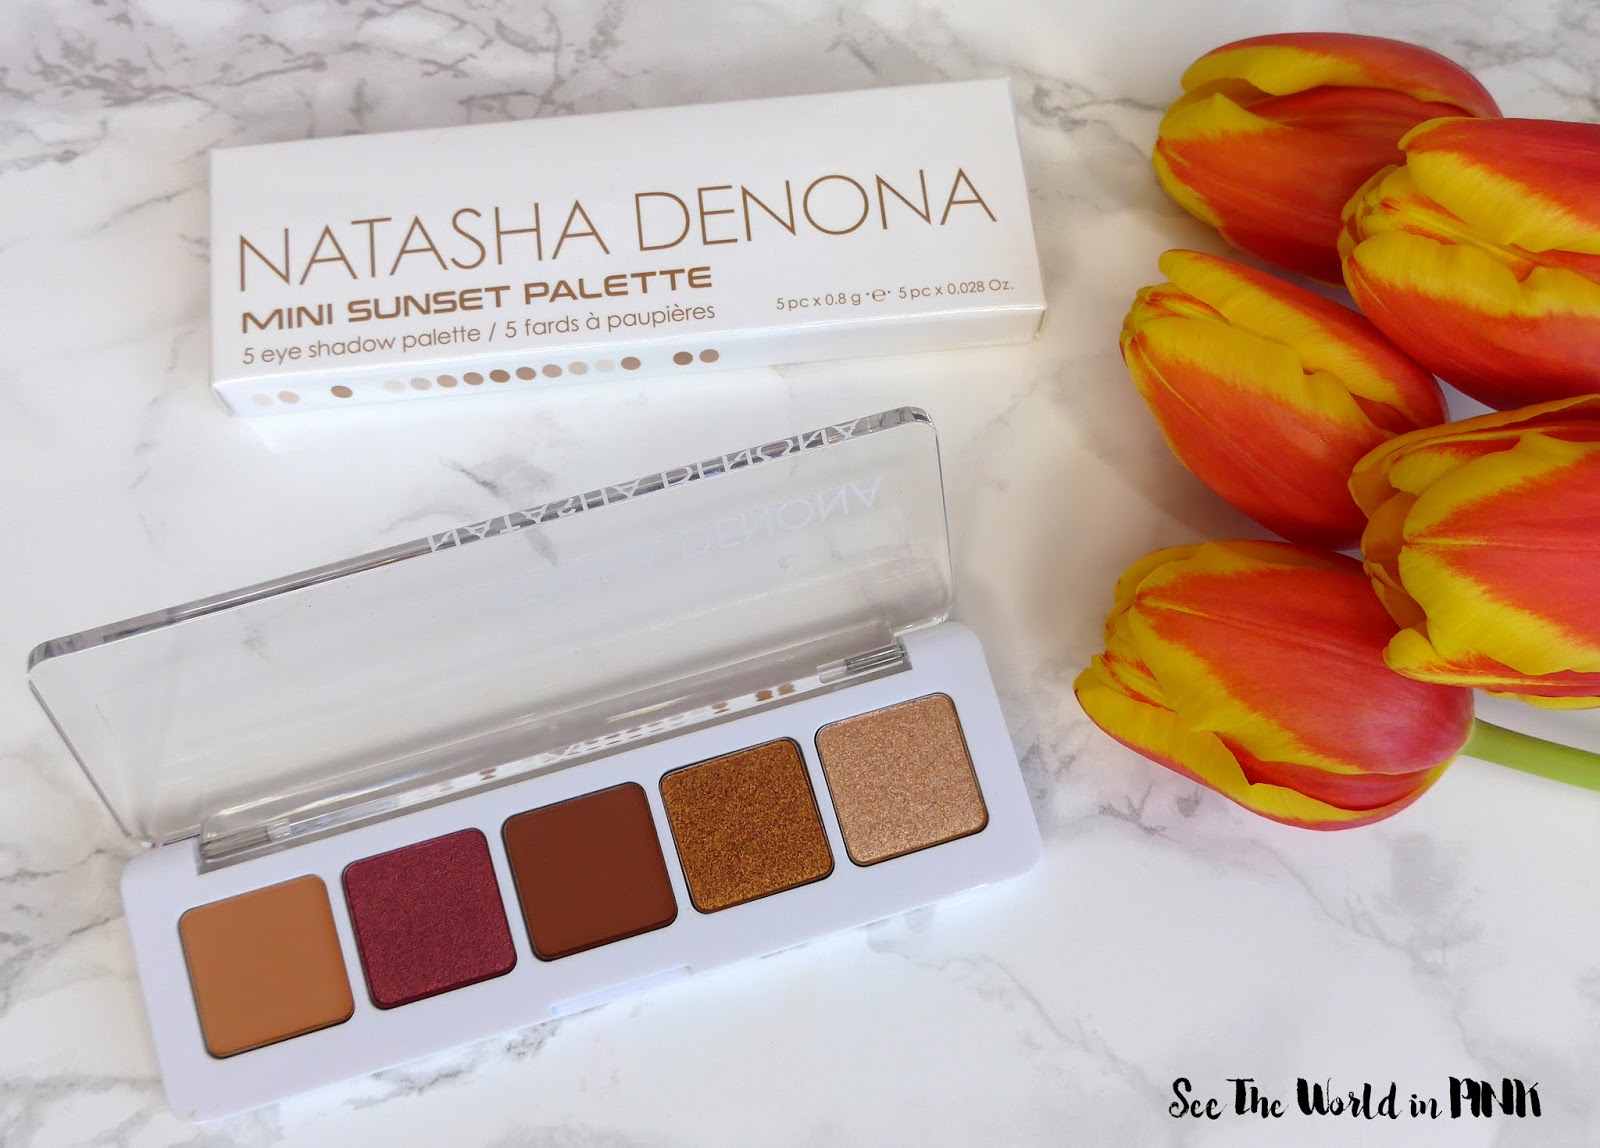 Natasha Denona Mini Sunset Eyeshadow Palette - Swatches, Makeup Look and Review! 